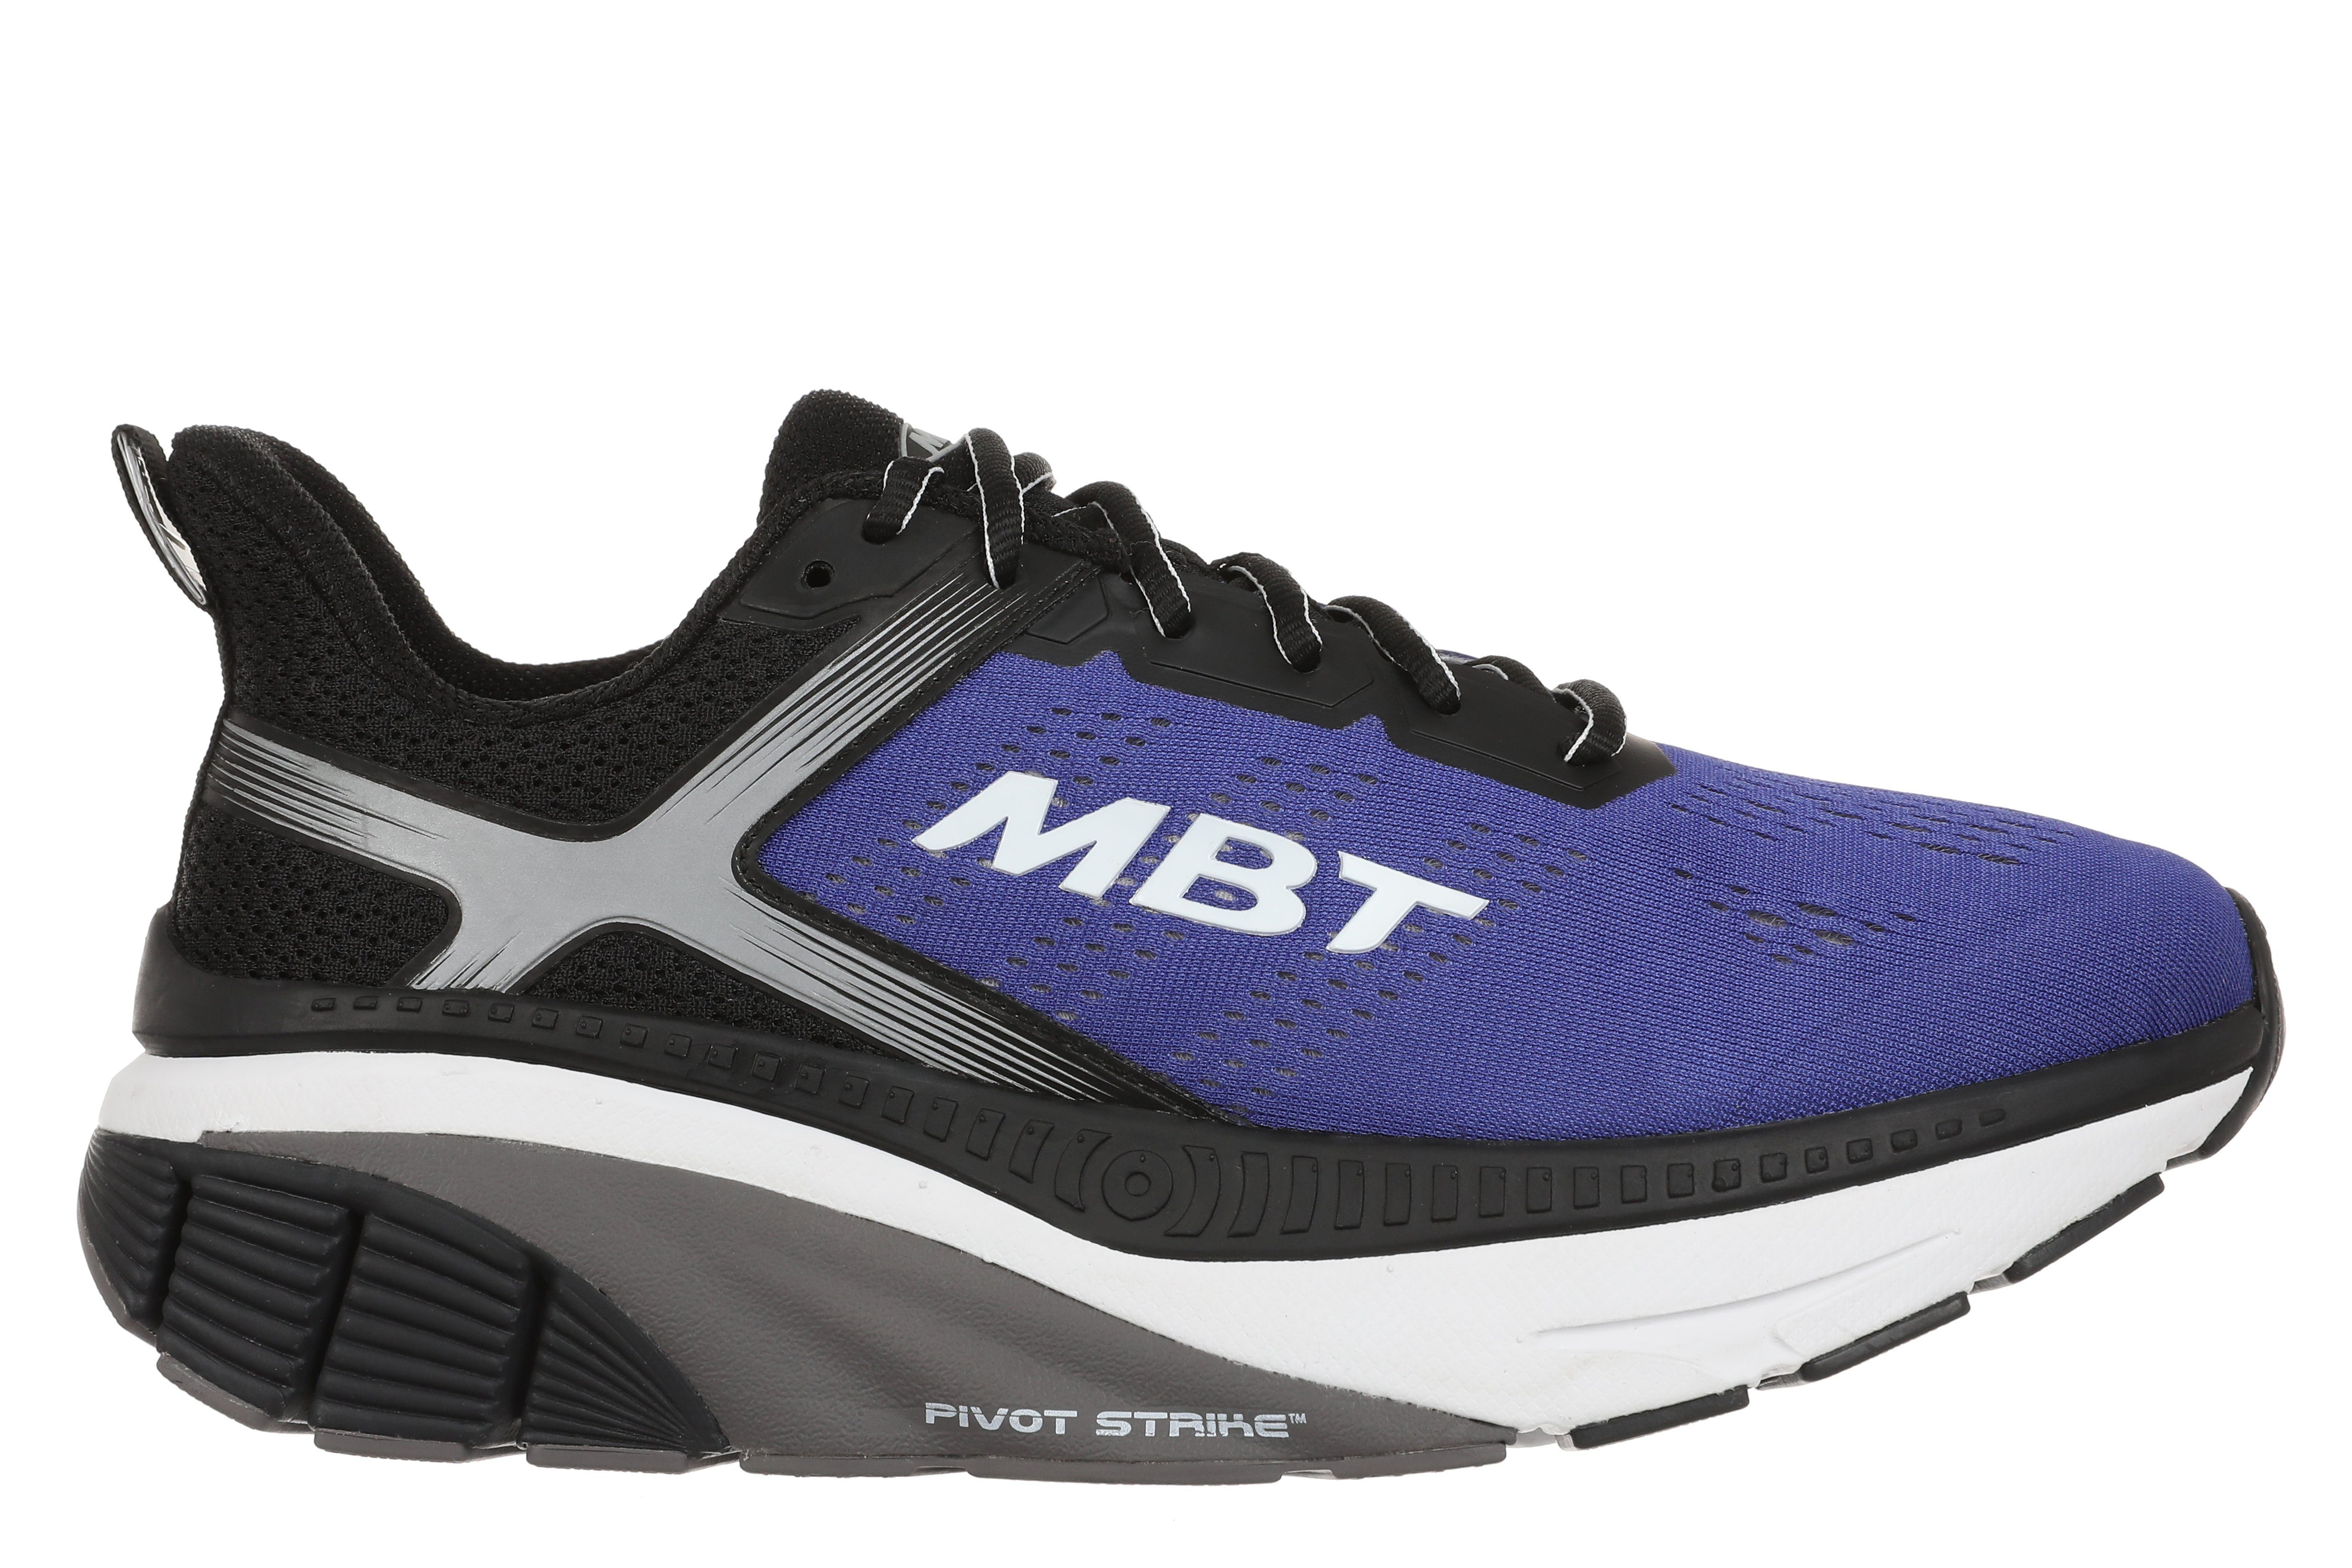 MBT Sneaker